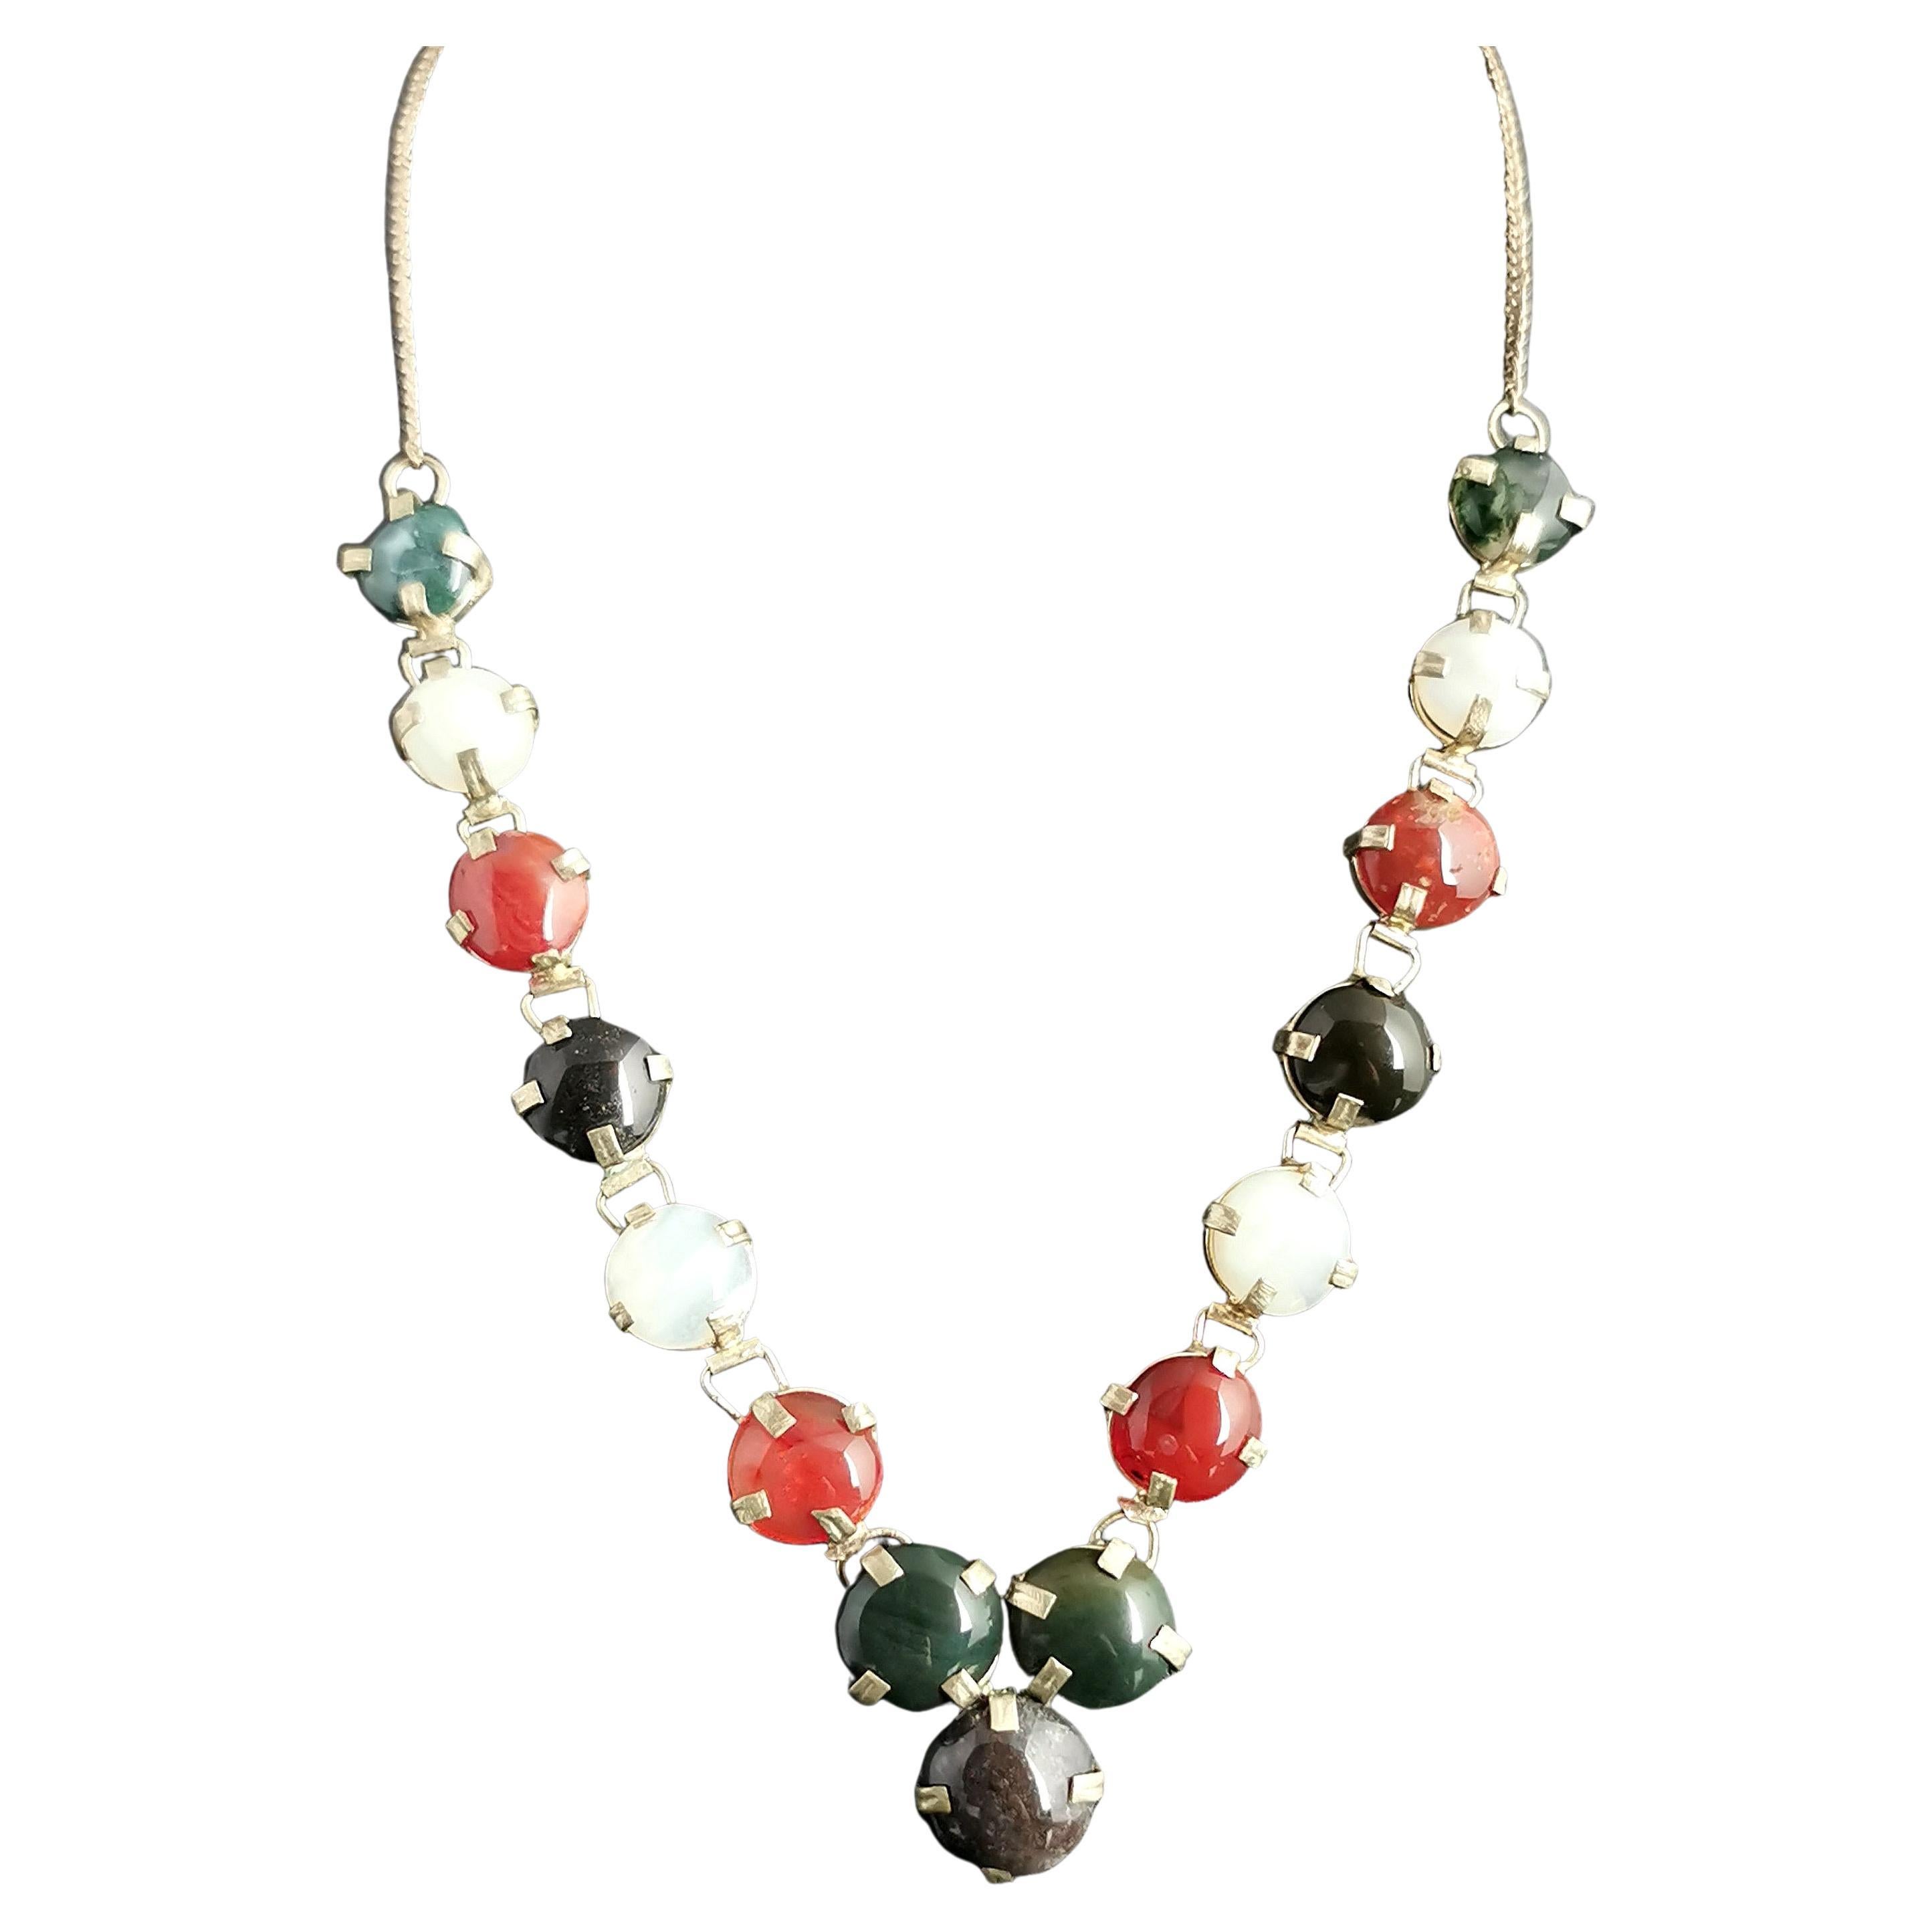 Randomly send Beautiful Mixed Gemstone Necklace & Earrings Set  Lx166 